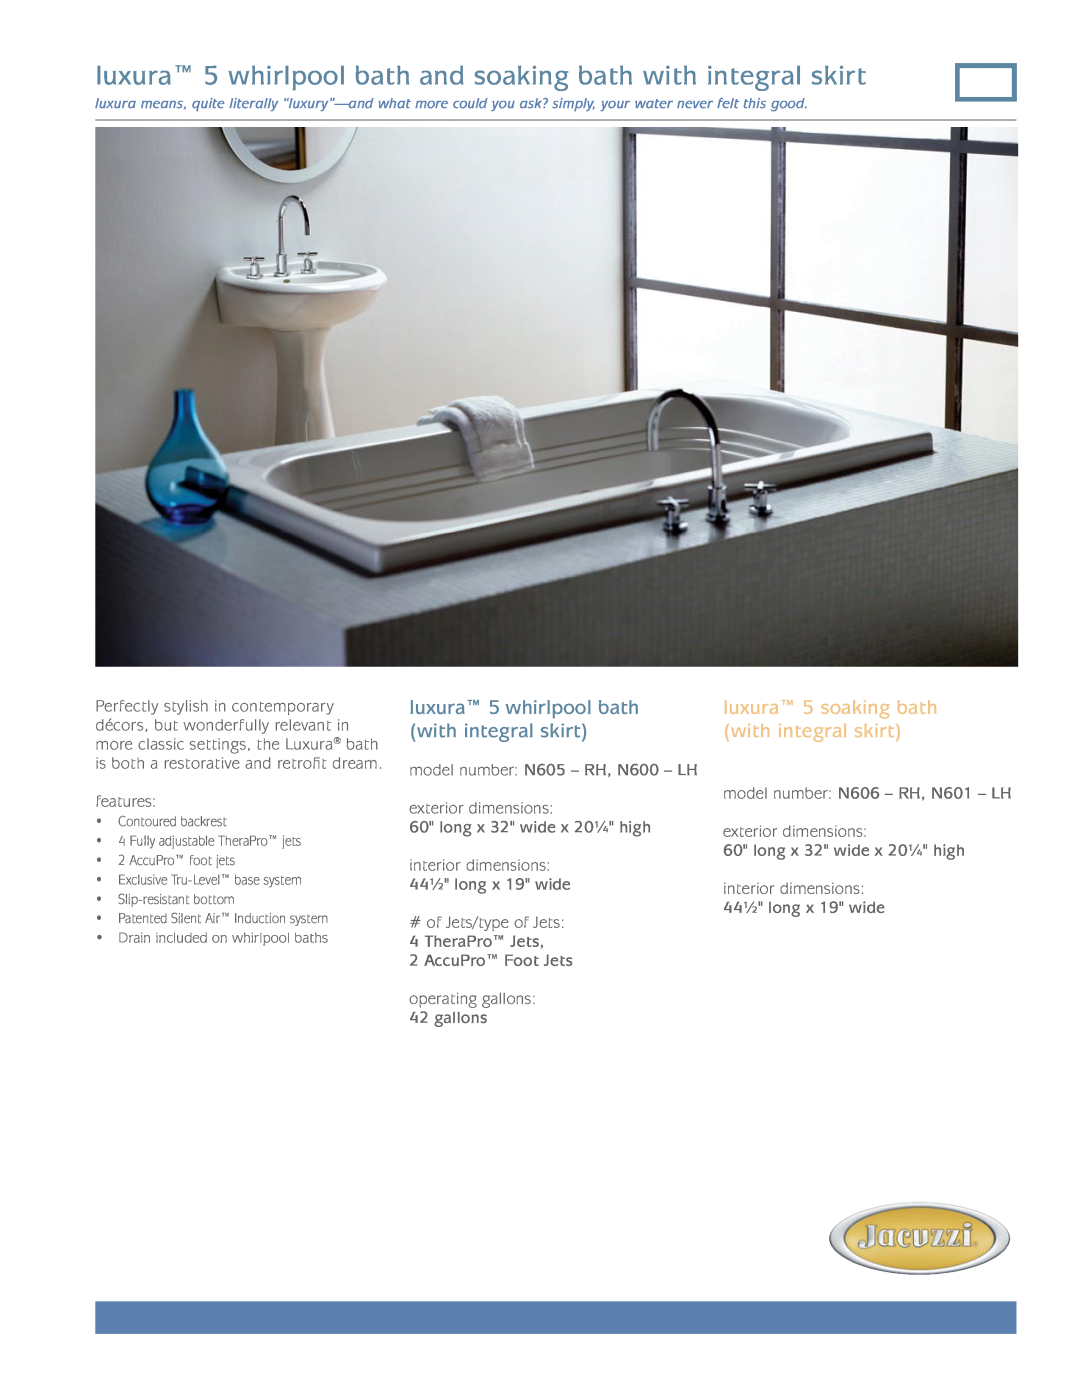 Jacuzzi N606-RH, N600-LH dimensions luxura 5 whirlpool bath and soaking bath with integral skirt, luxura 5 soaking bath 